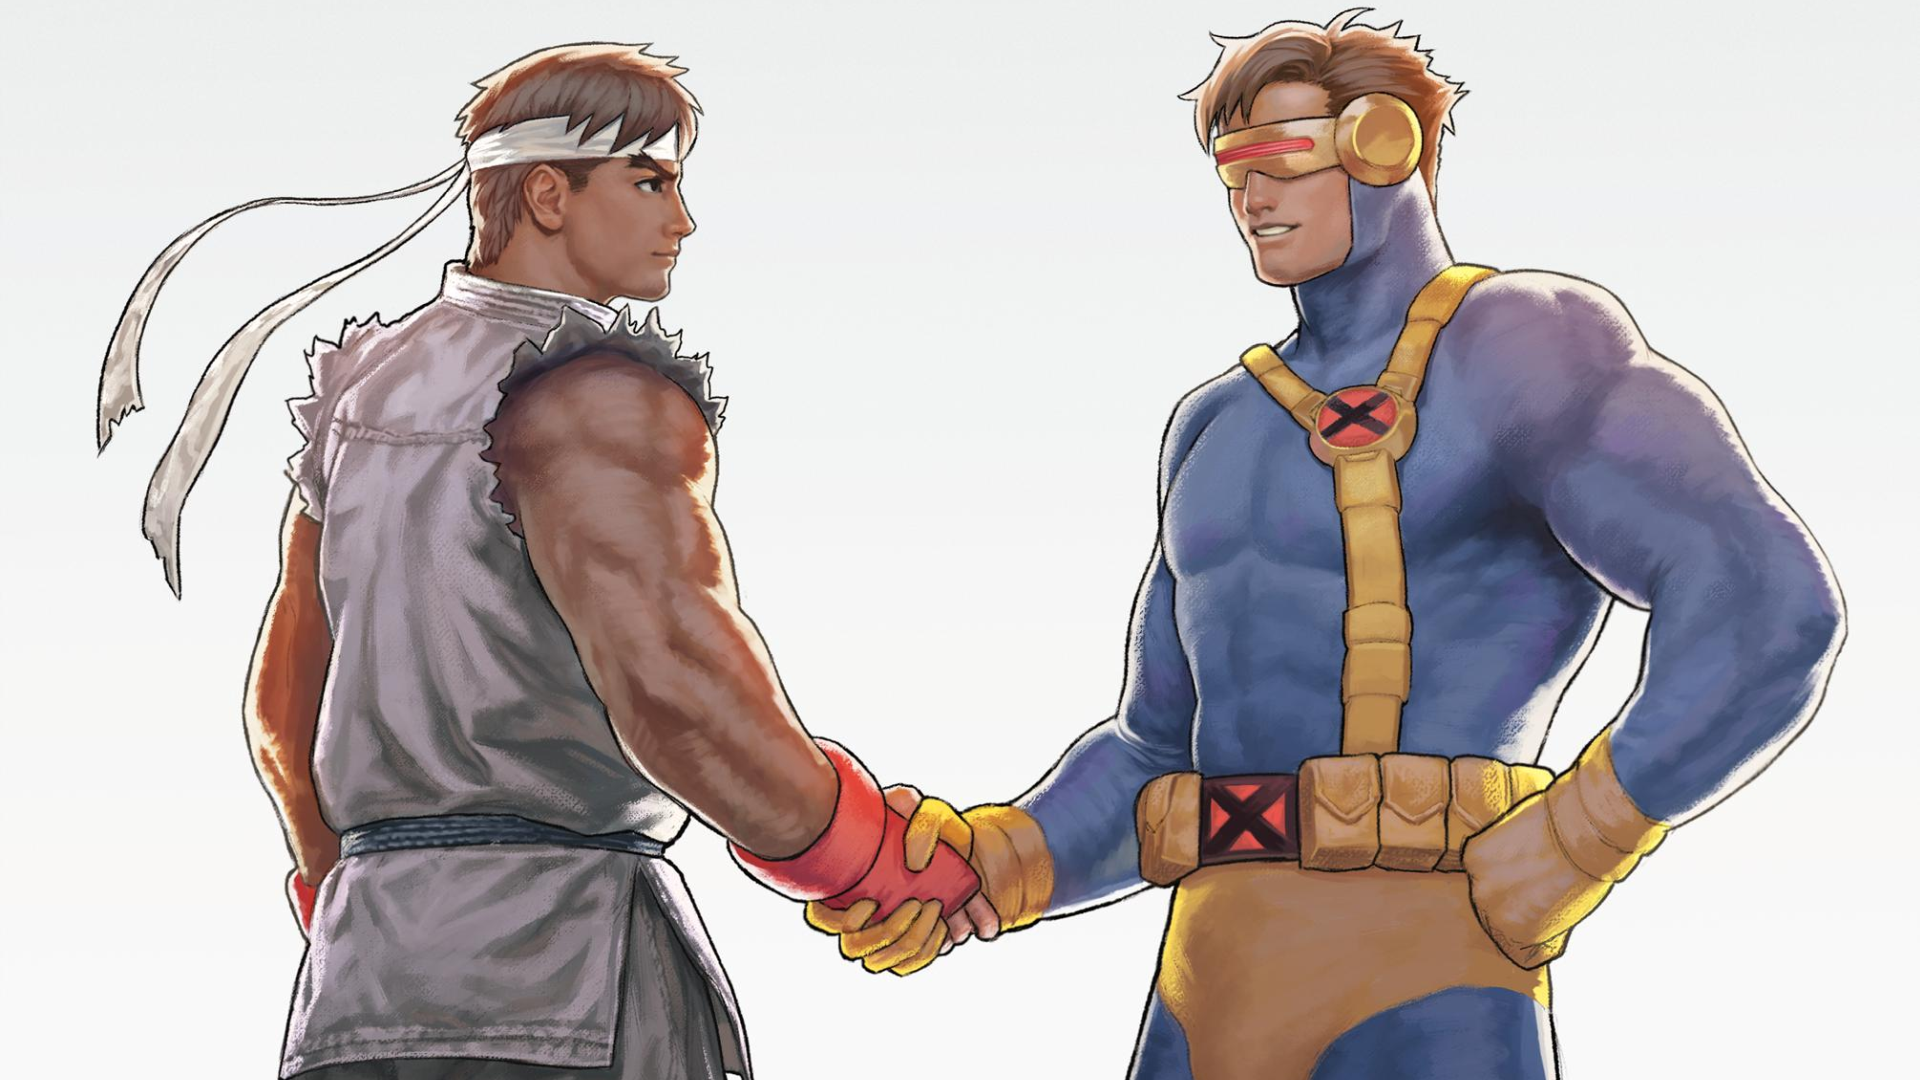 Video Game Marvel Super Heroes vs. Street Fighter HD Wallpaper